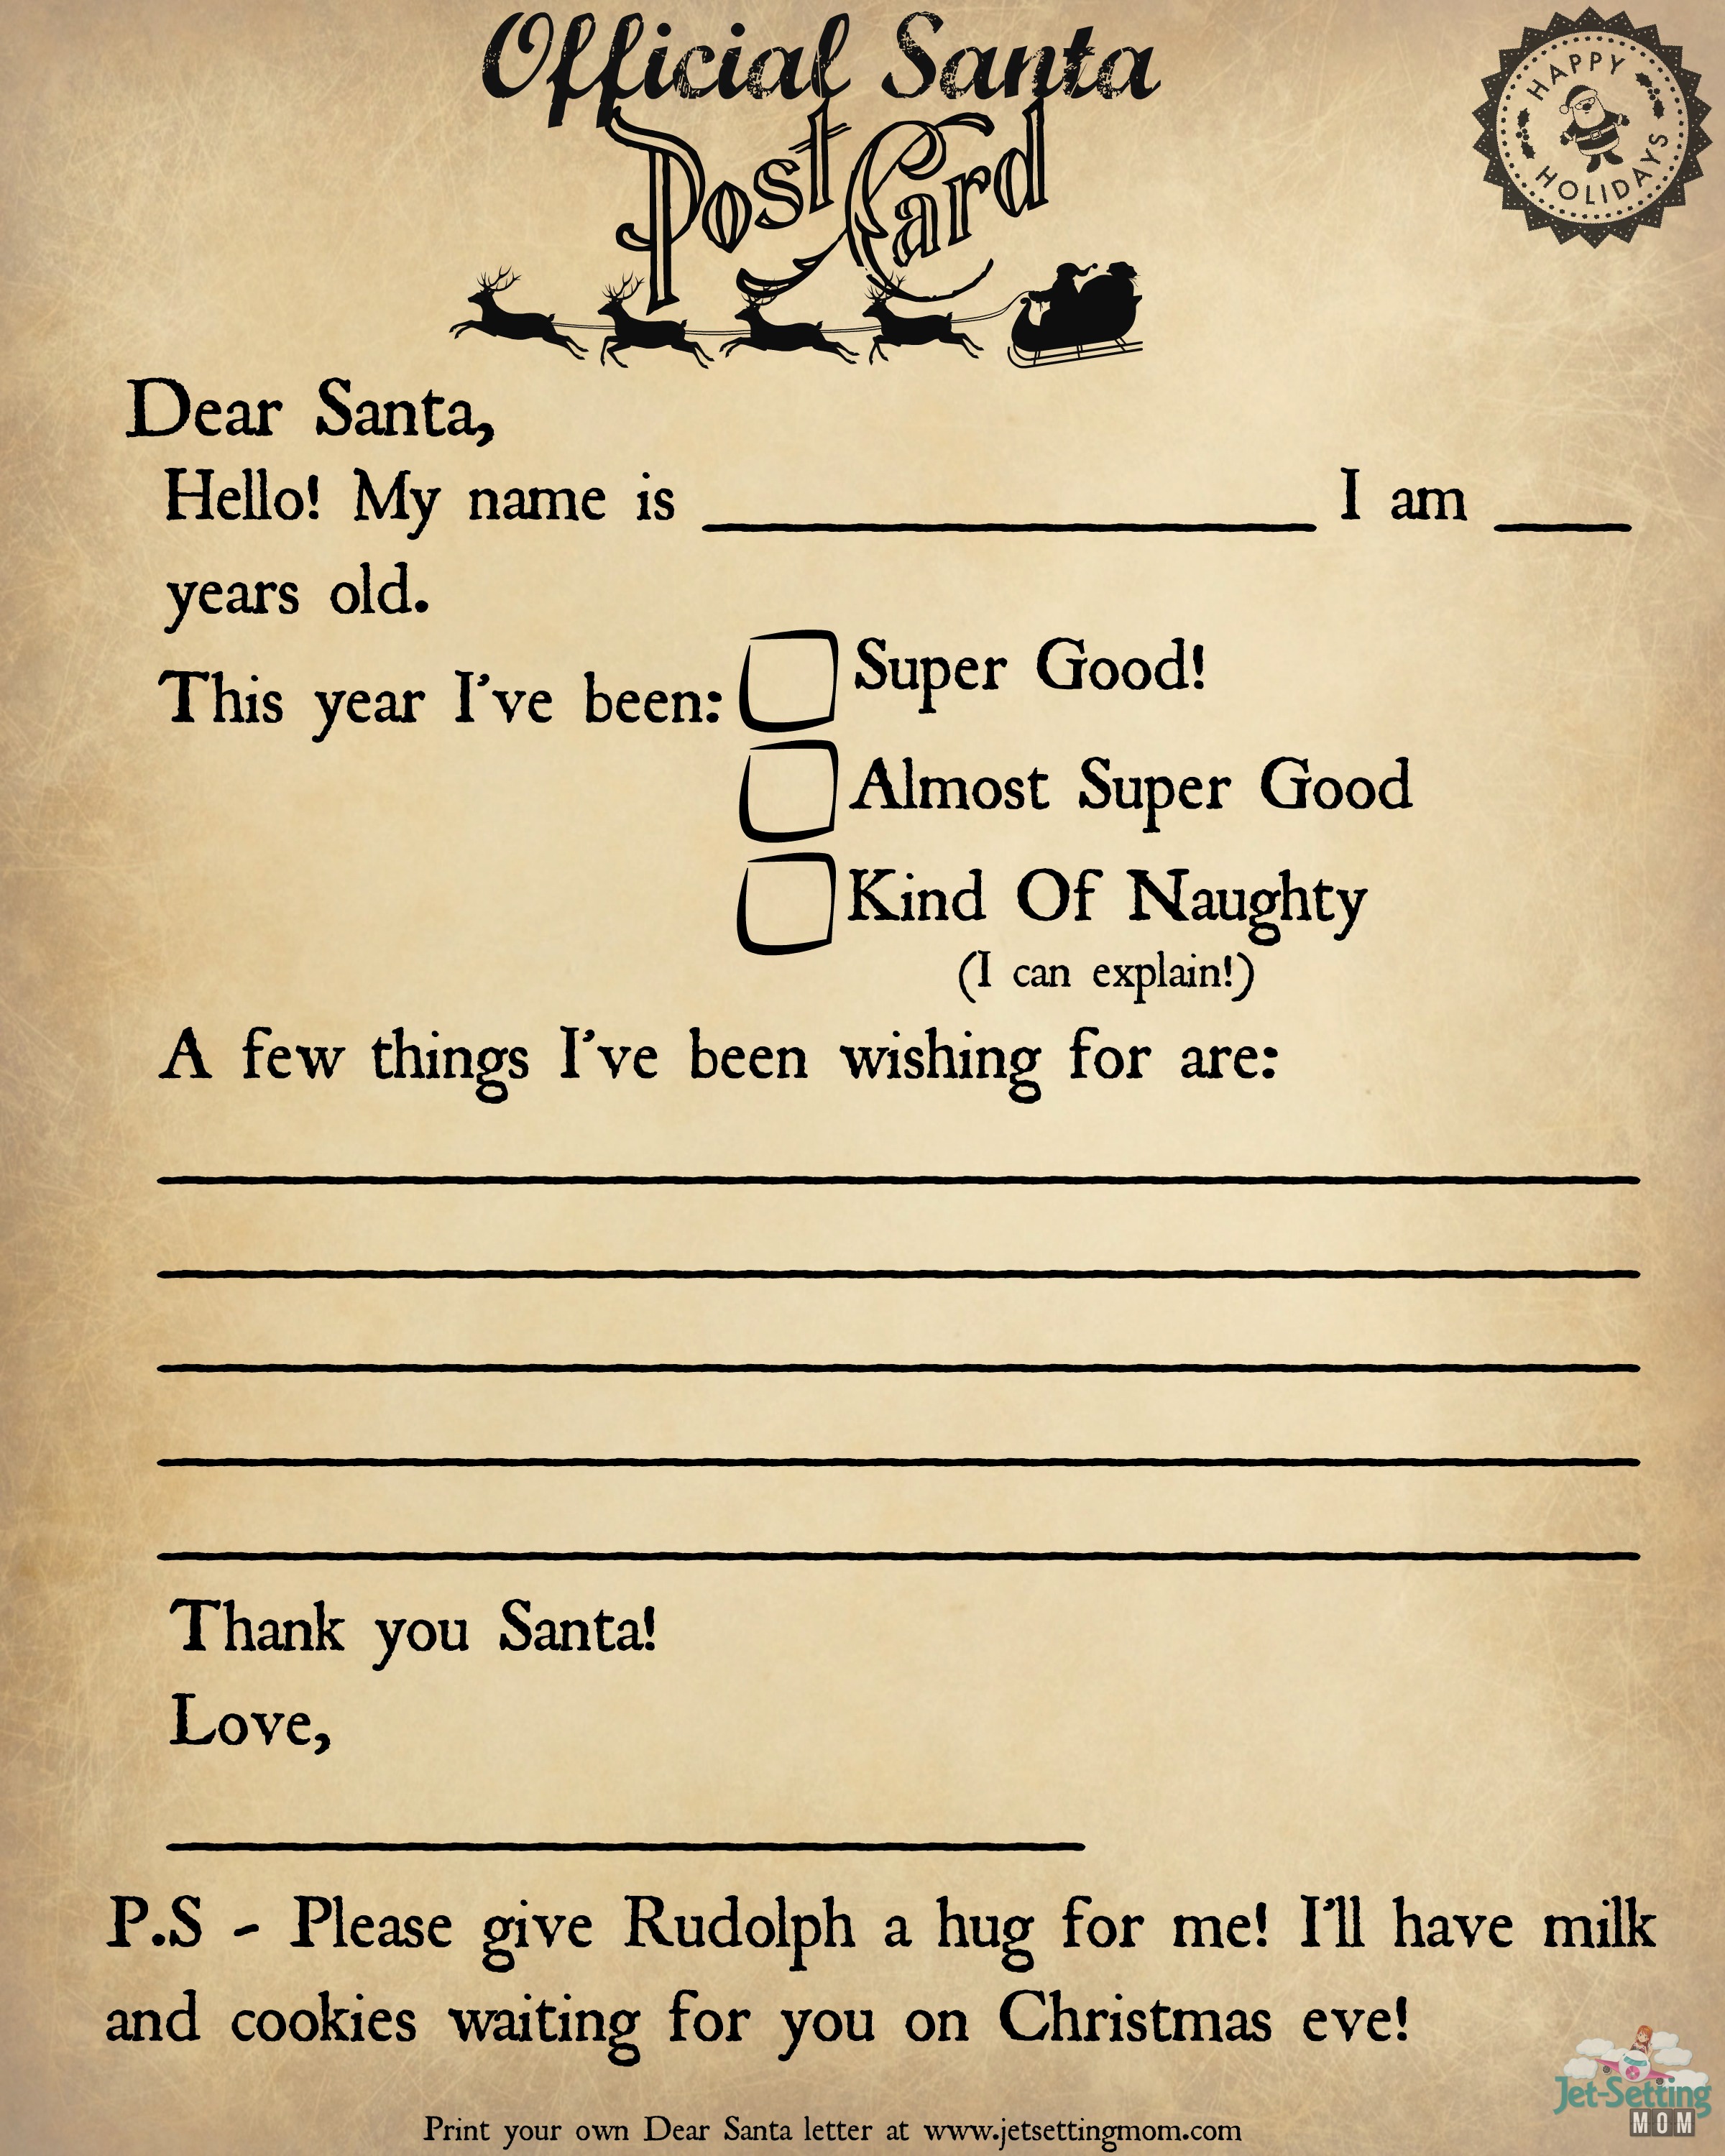 Dear Santa letter template at jetsettingmom.com